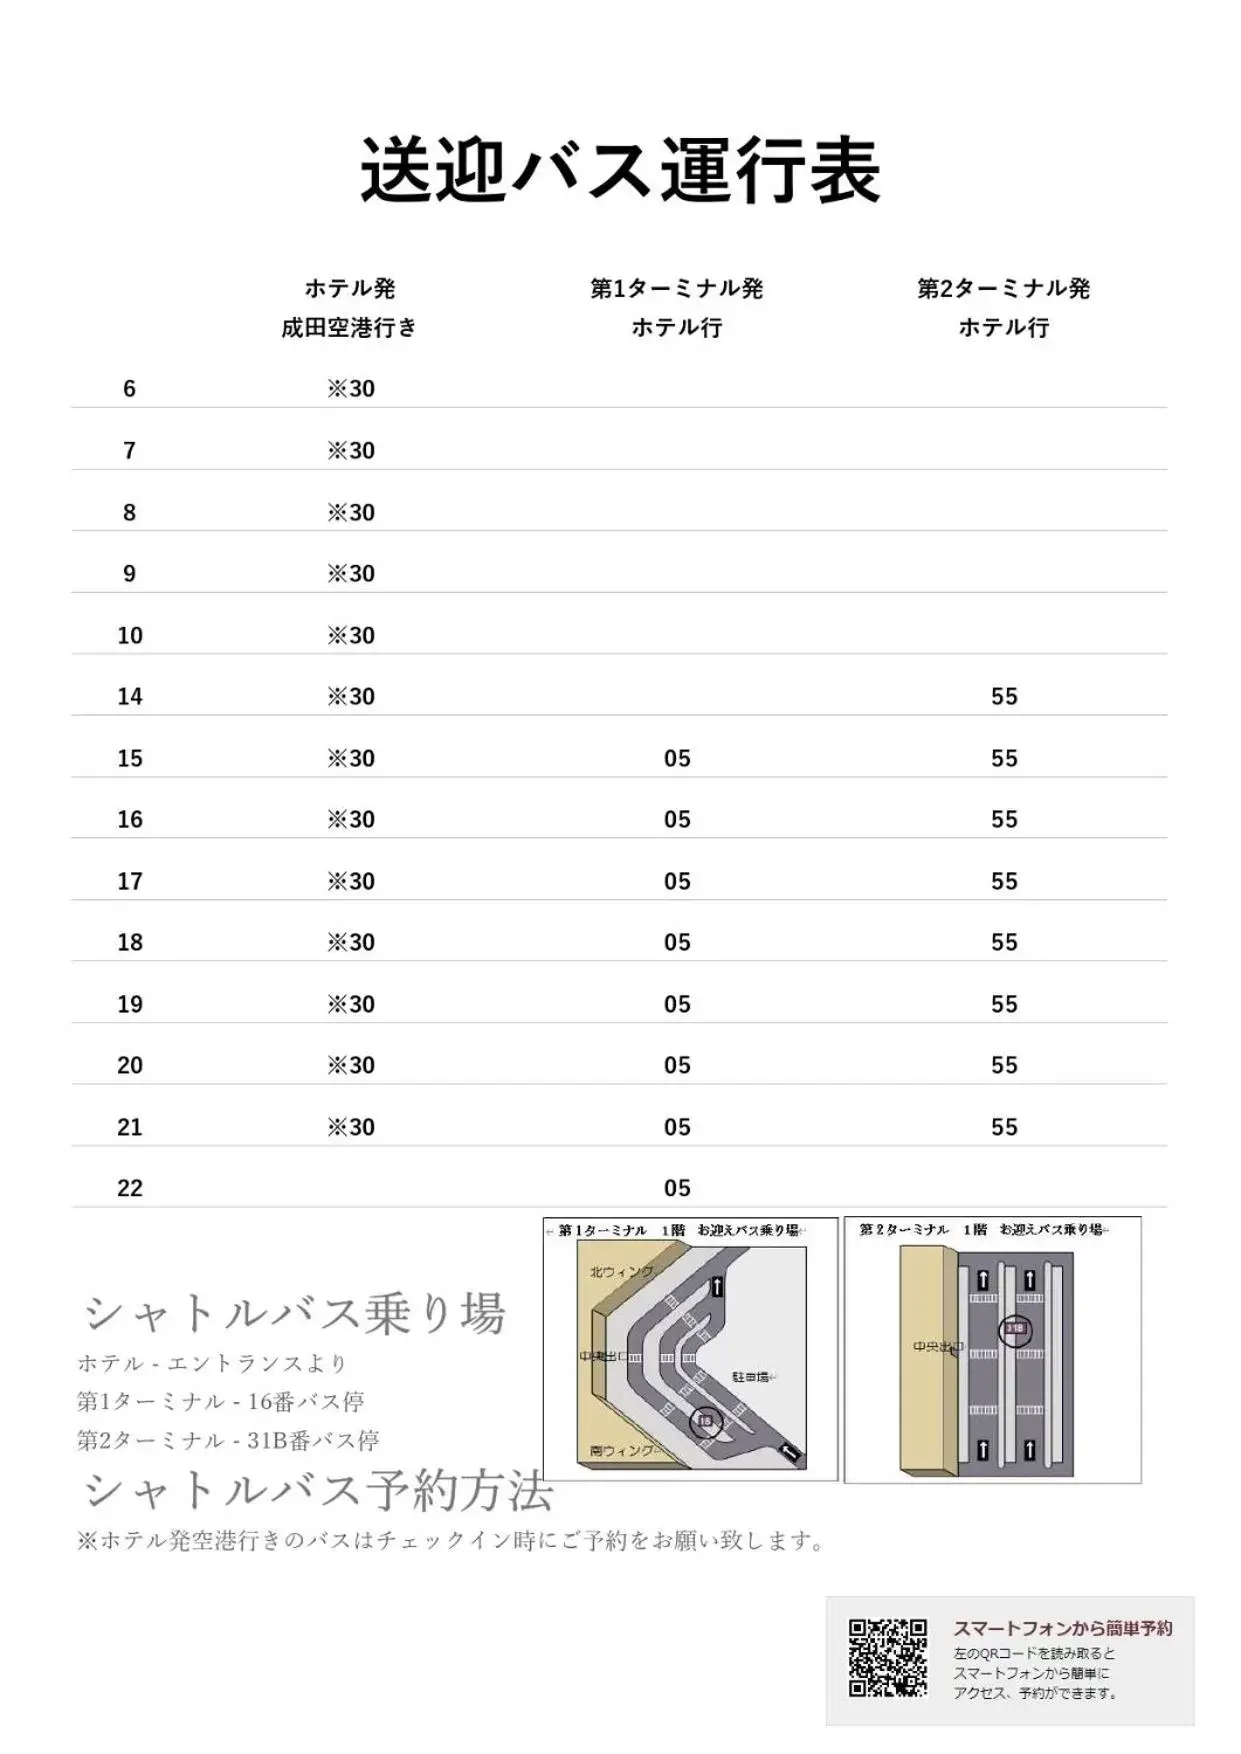 Floor Plan in The Hedistar Hotel Narita